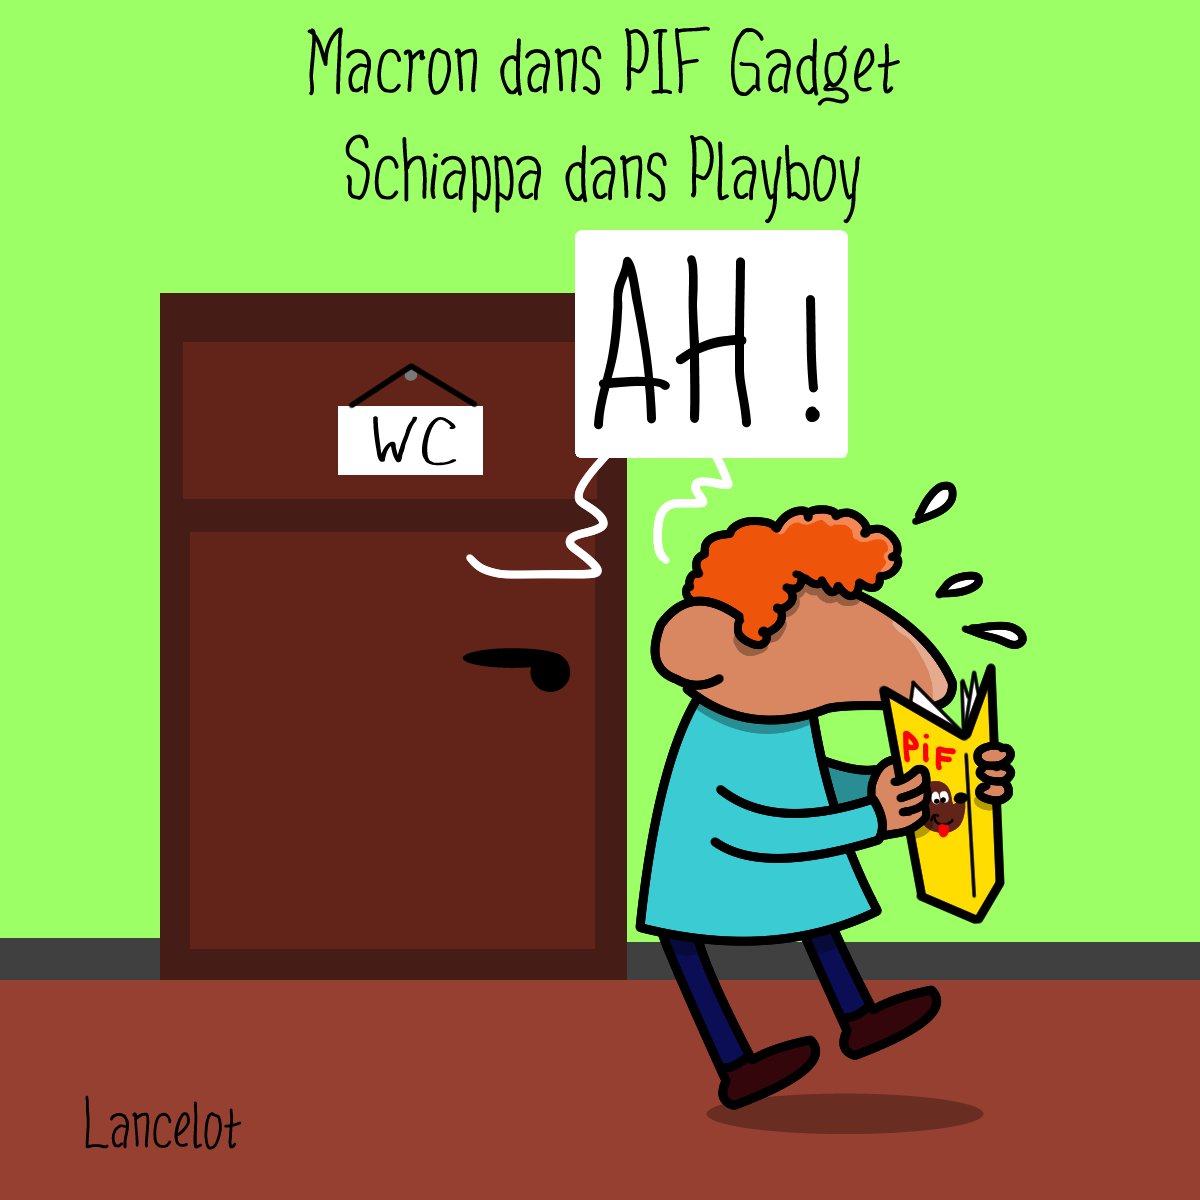 #SchiappaRendsLargent 
#MacronTrouDuCul